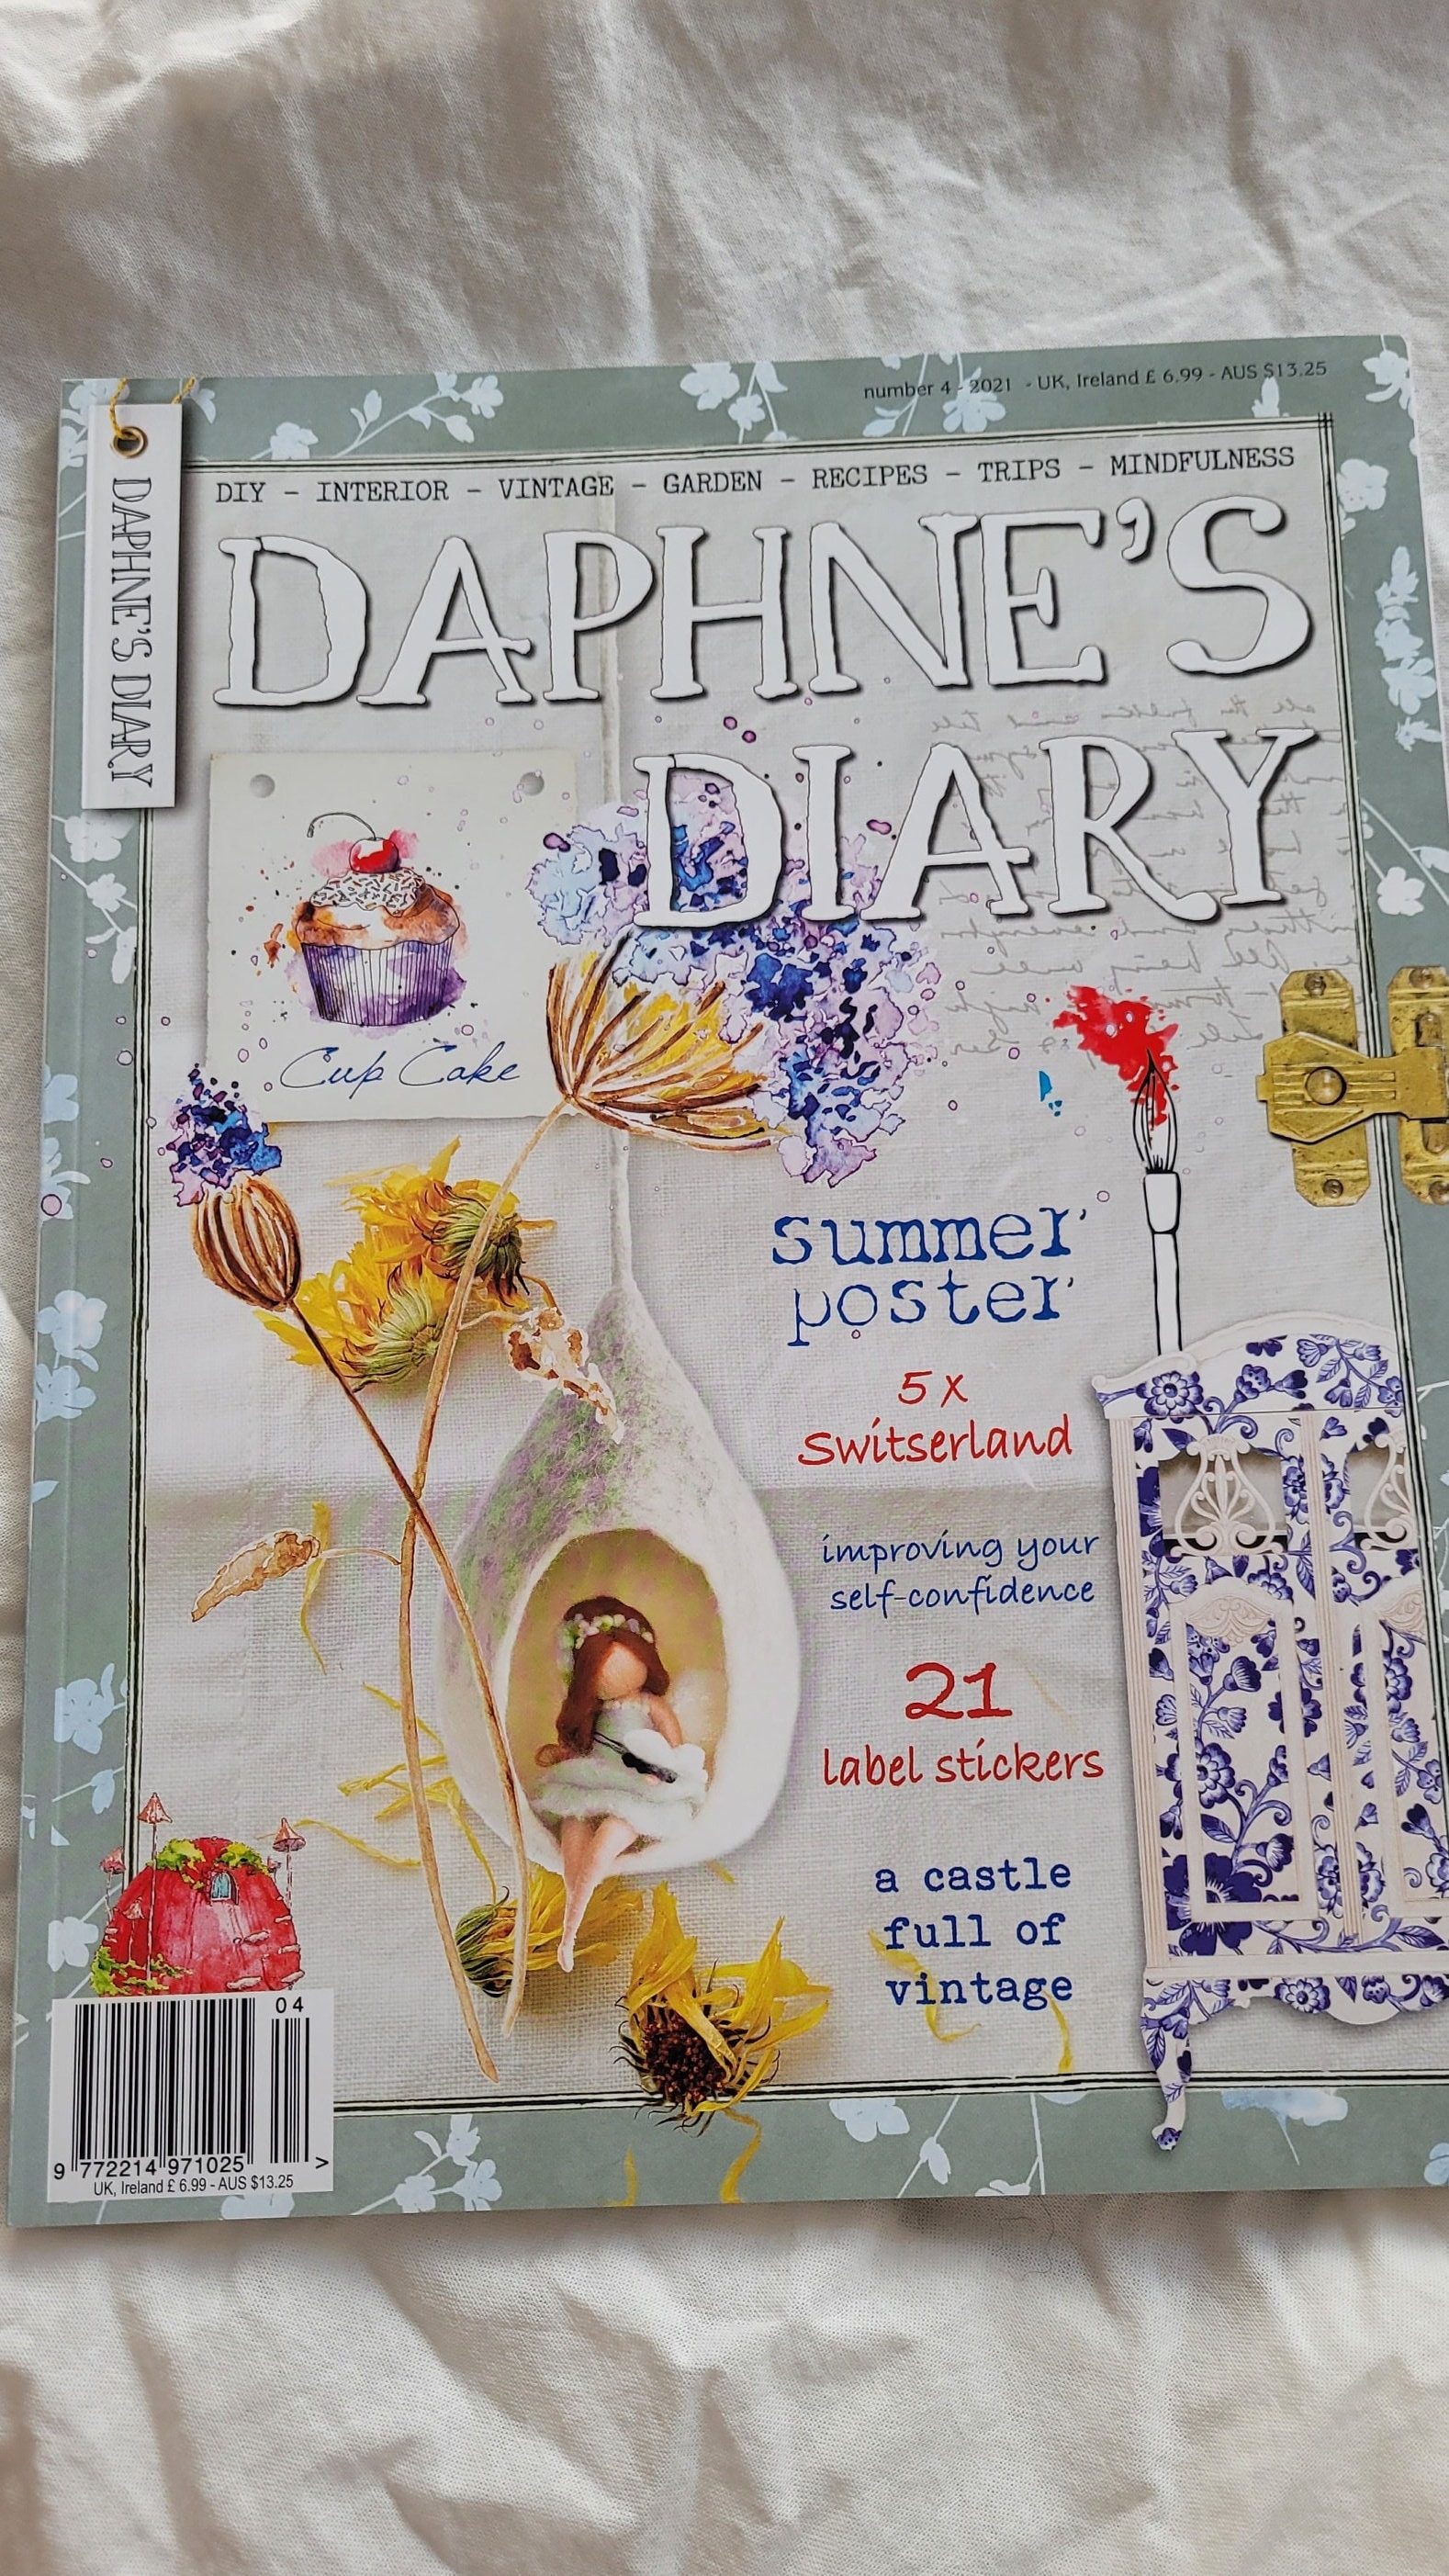 Daphne's Diary Colouring Book